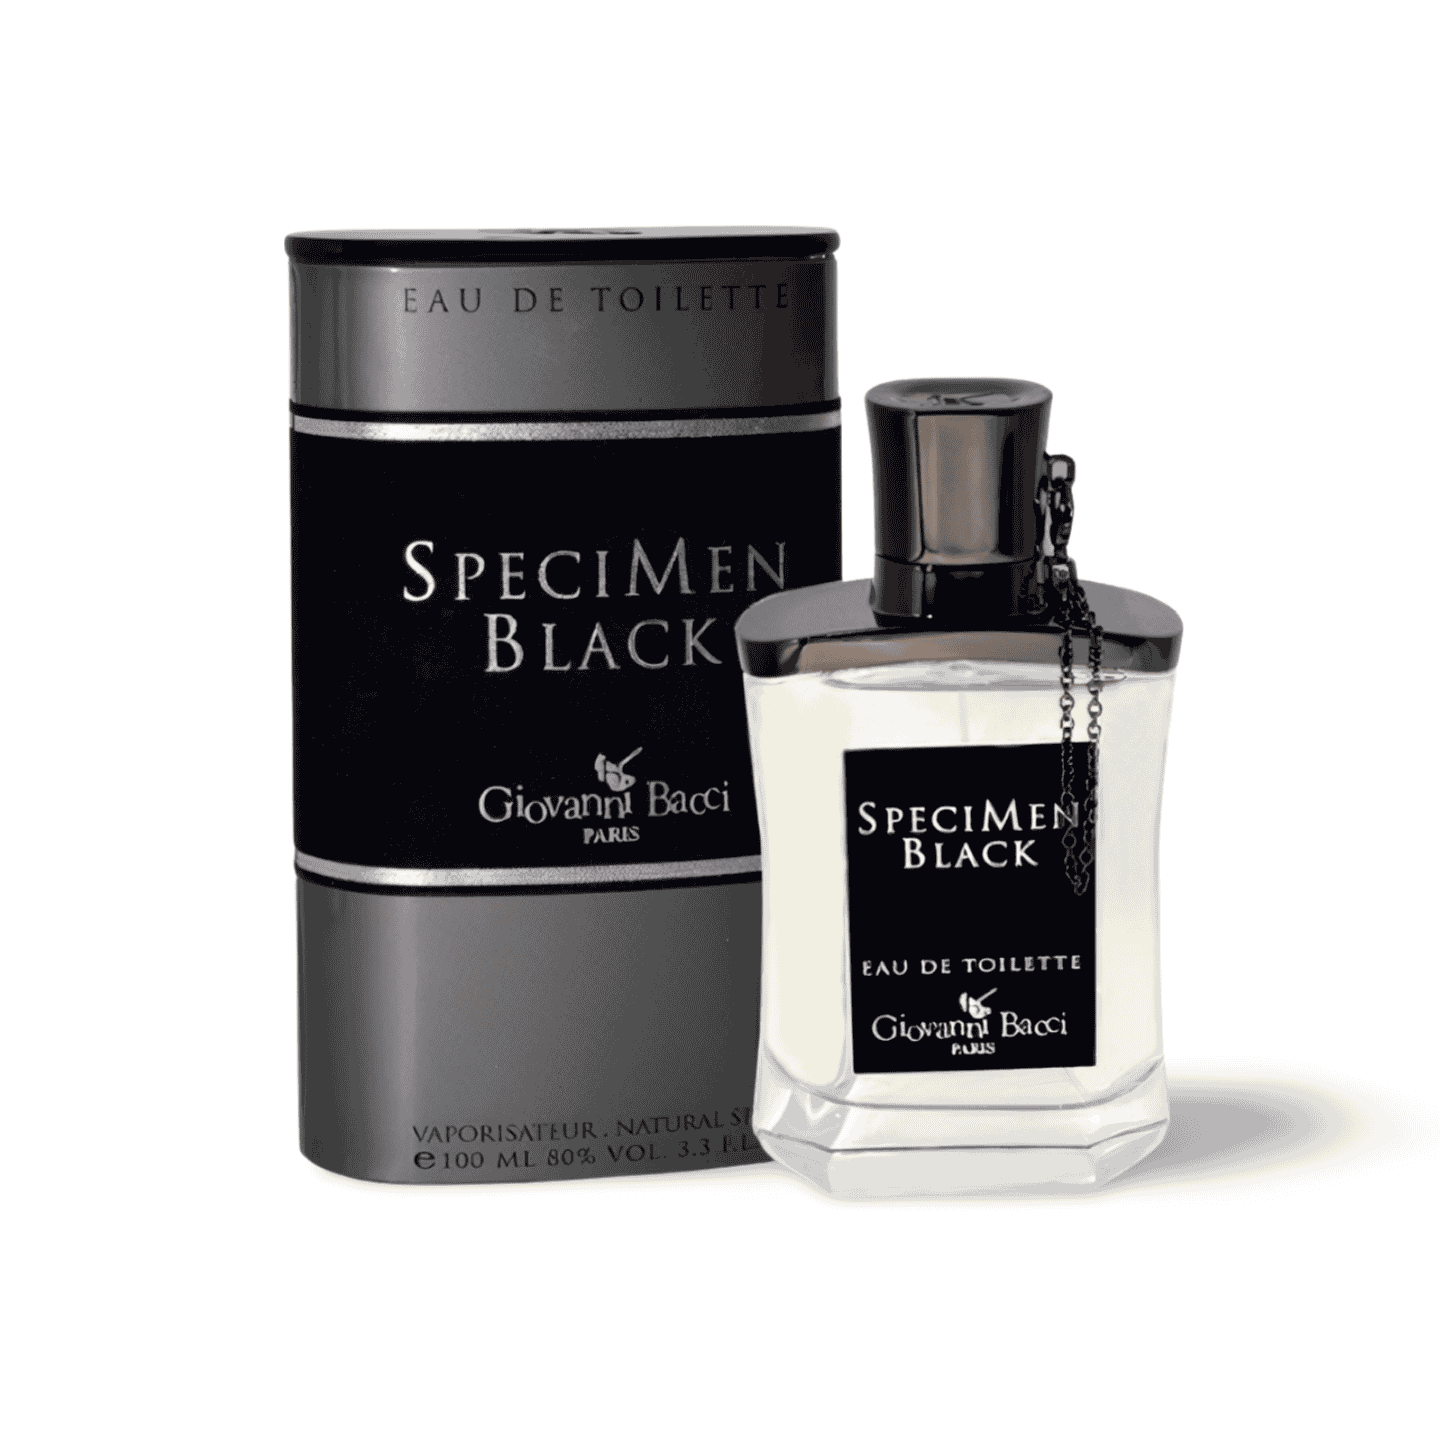 Specimen Black Giovanni Bacci Paris Perfumes